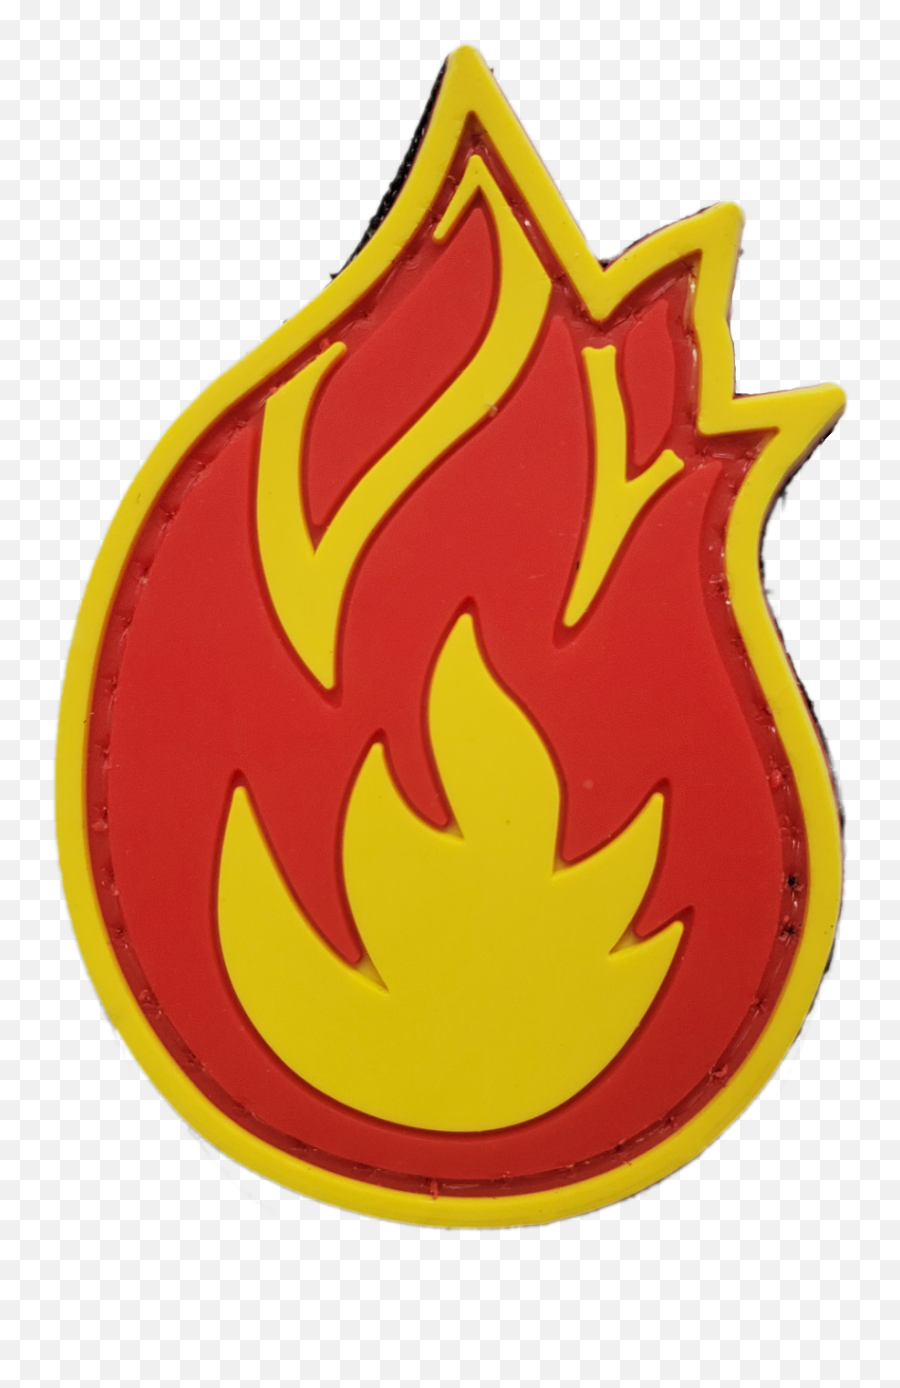 Fireball Pvc Morale Patch - Opsgear Dp Creations Llc Emoji,Fireball Transparent Background